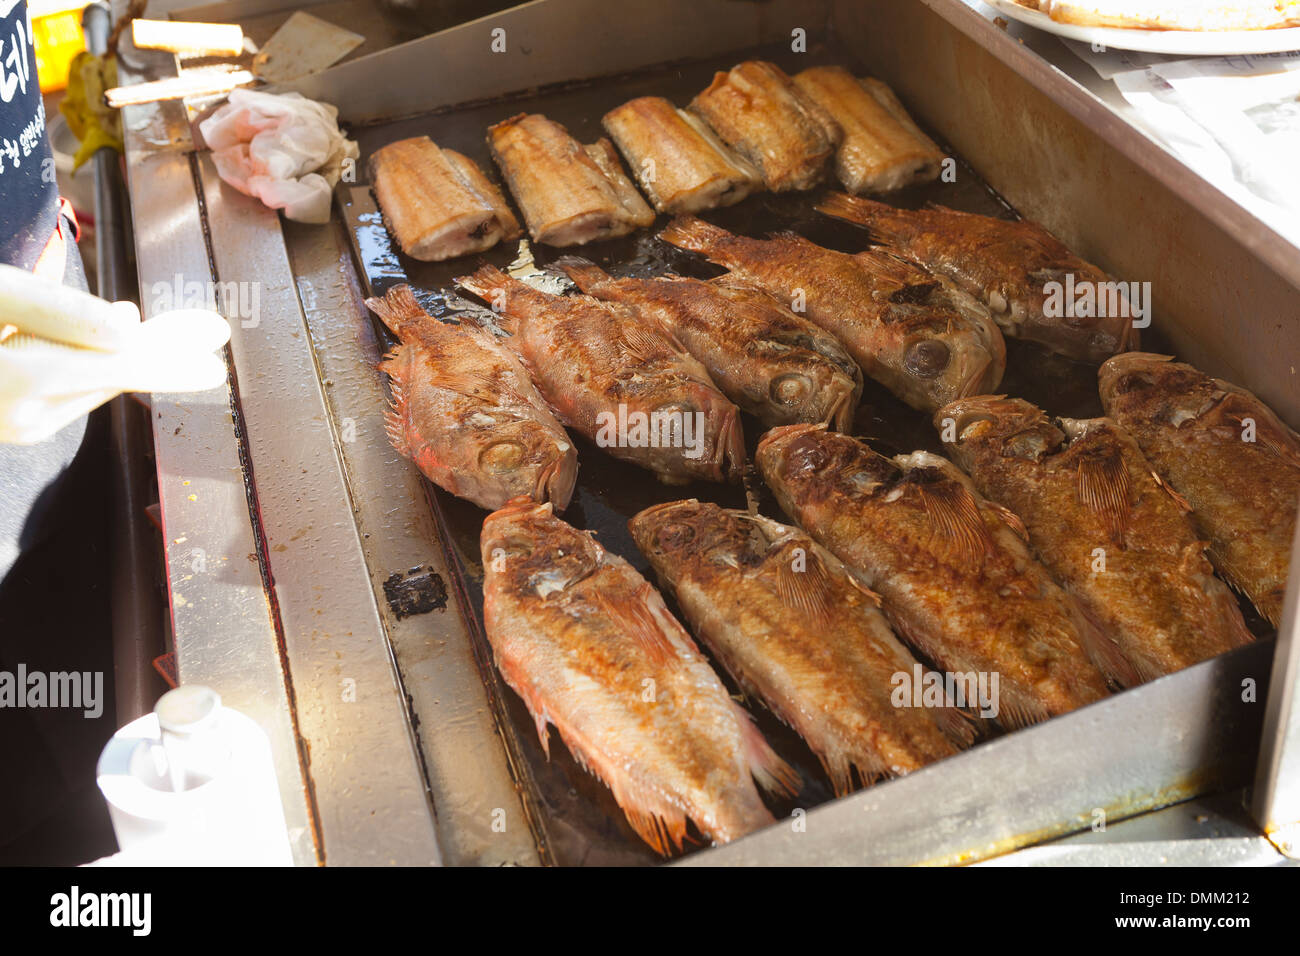 Whole fish frying on griddle at Jagalchi shijang (traditional outdoor market) - Busan, South Korea Stock Photo